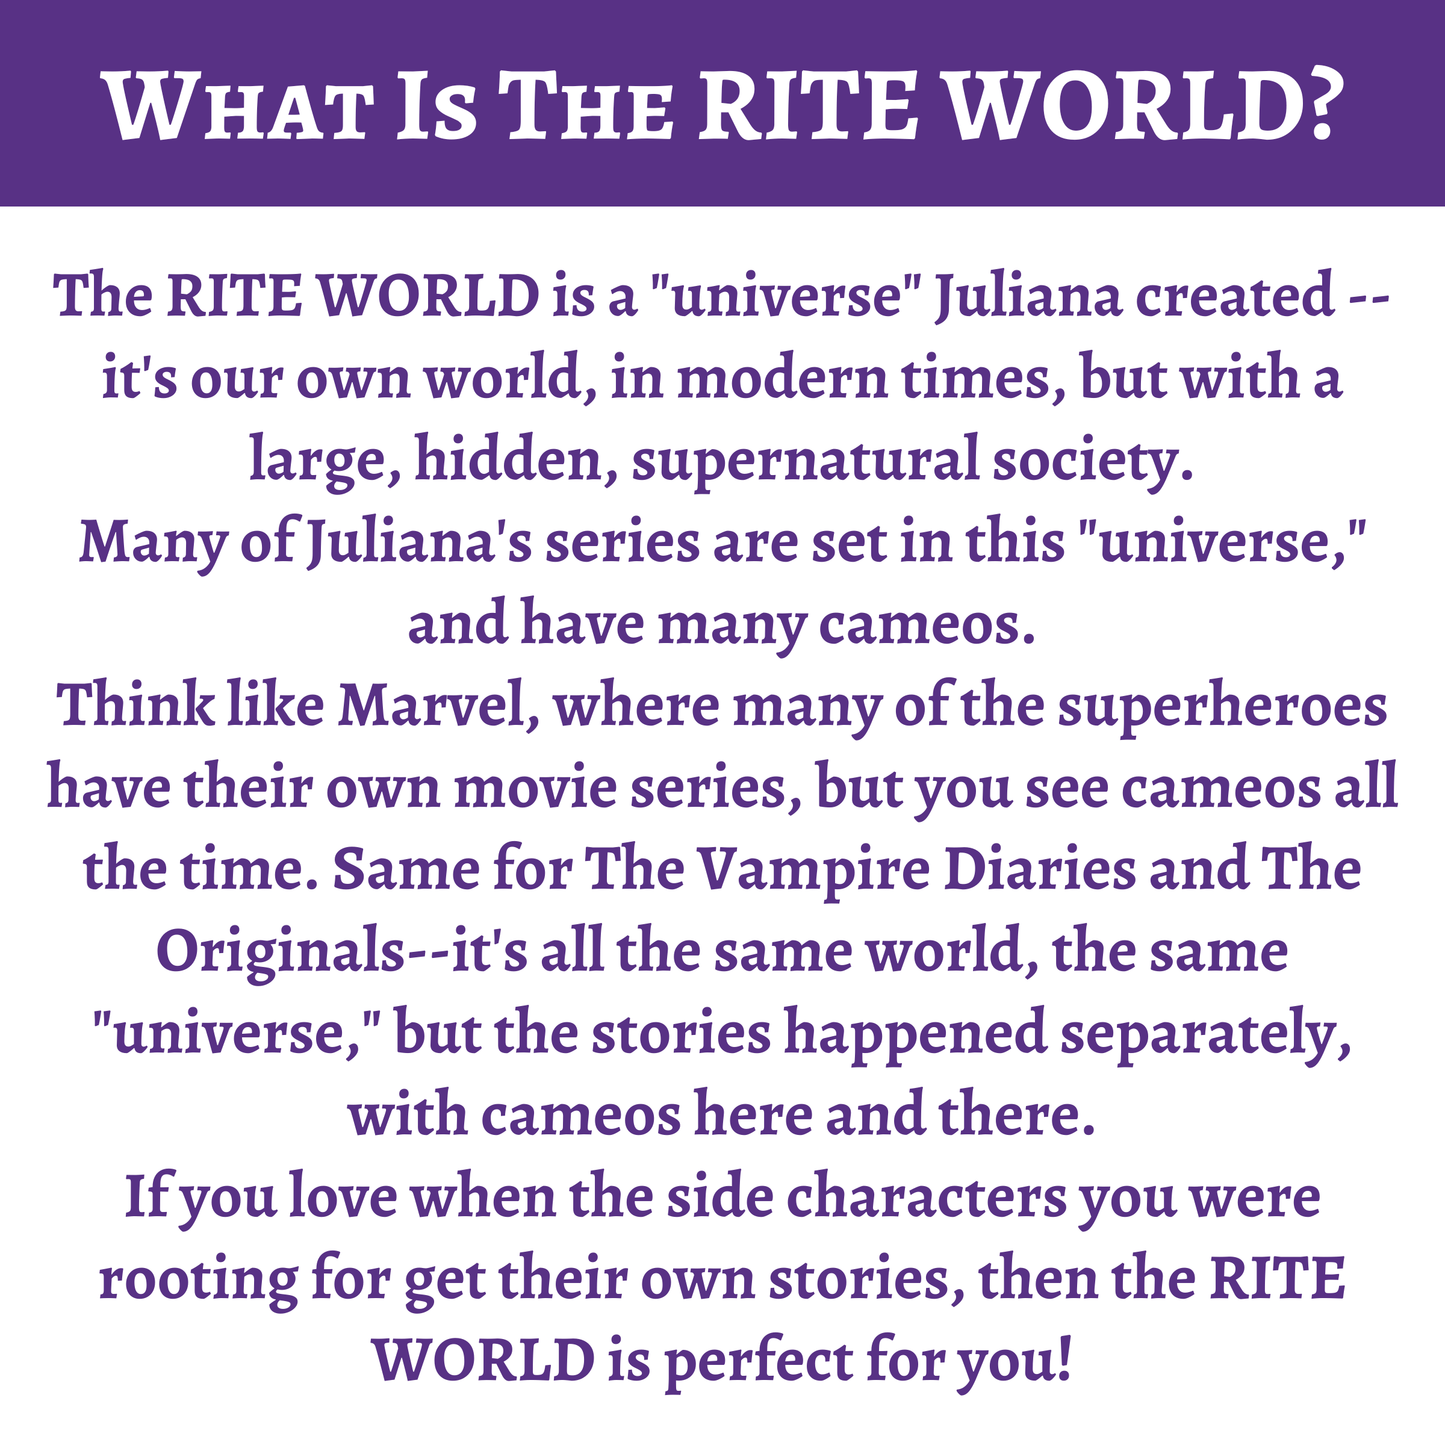 Rite World: Vampire Wars Series eBook Bundle